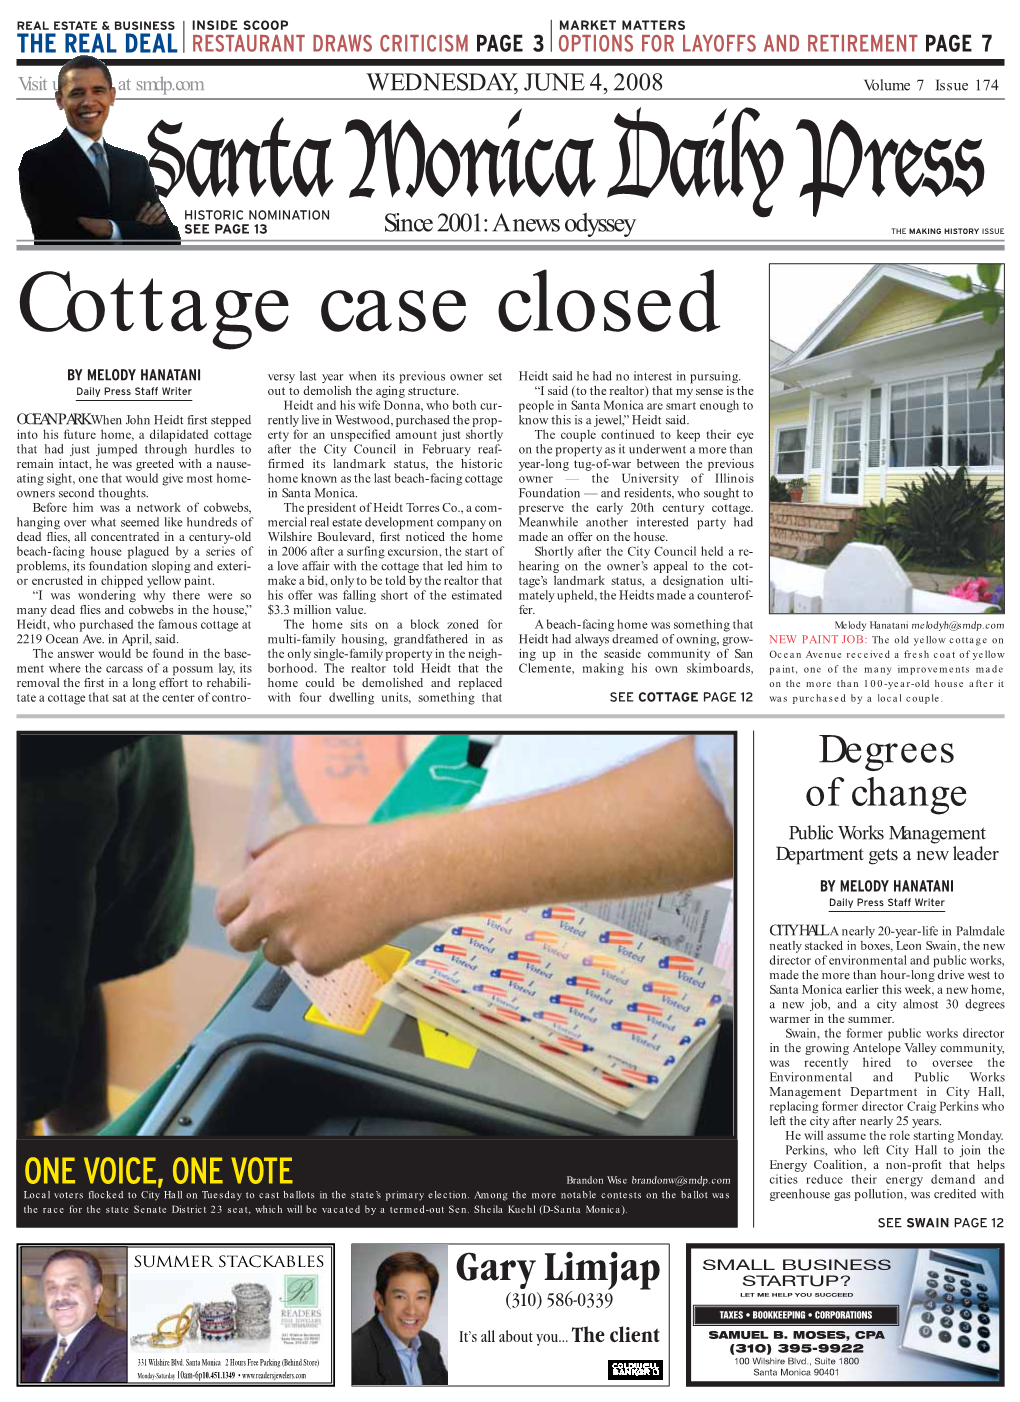 Cottage Case Closed